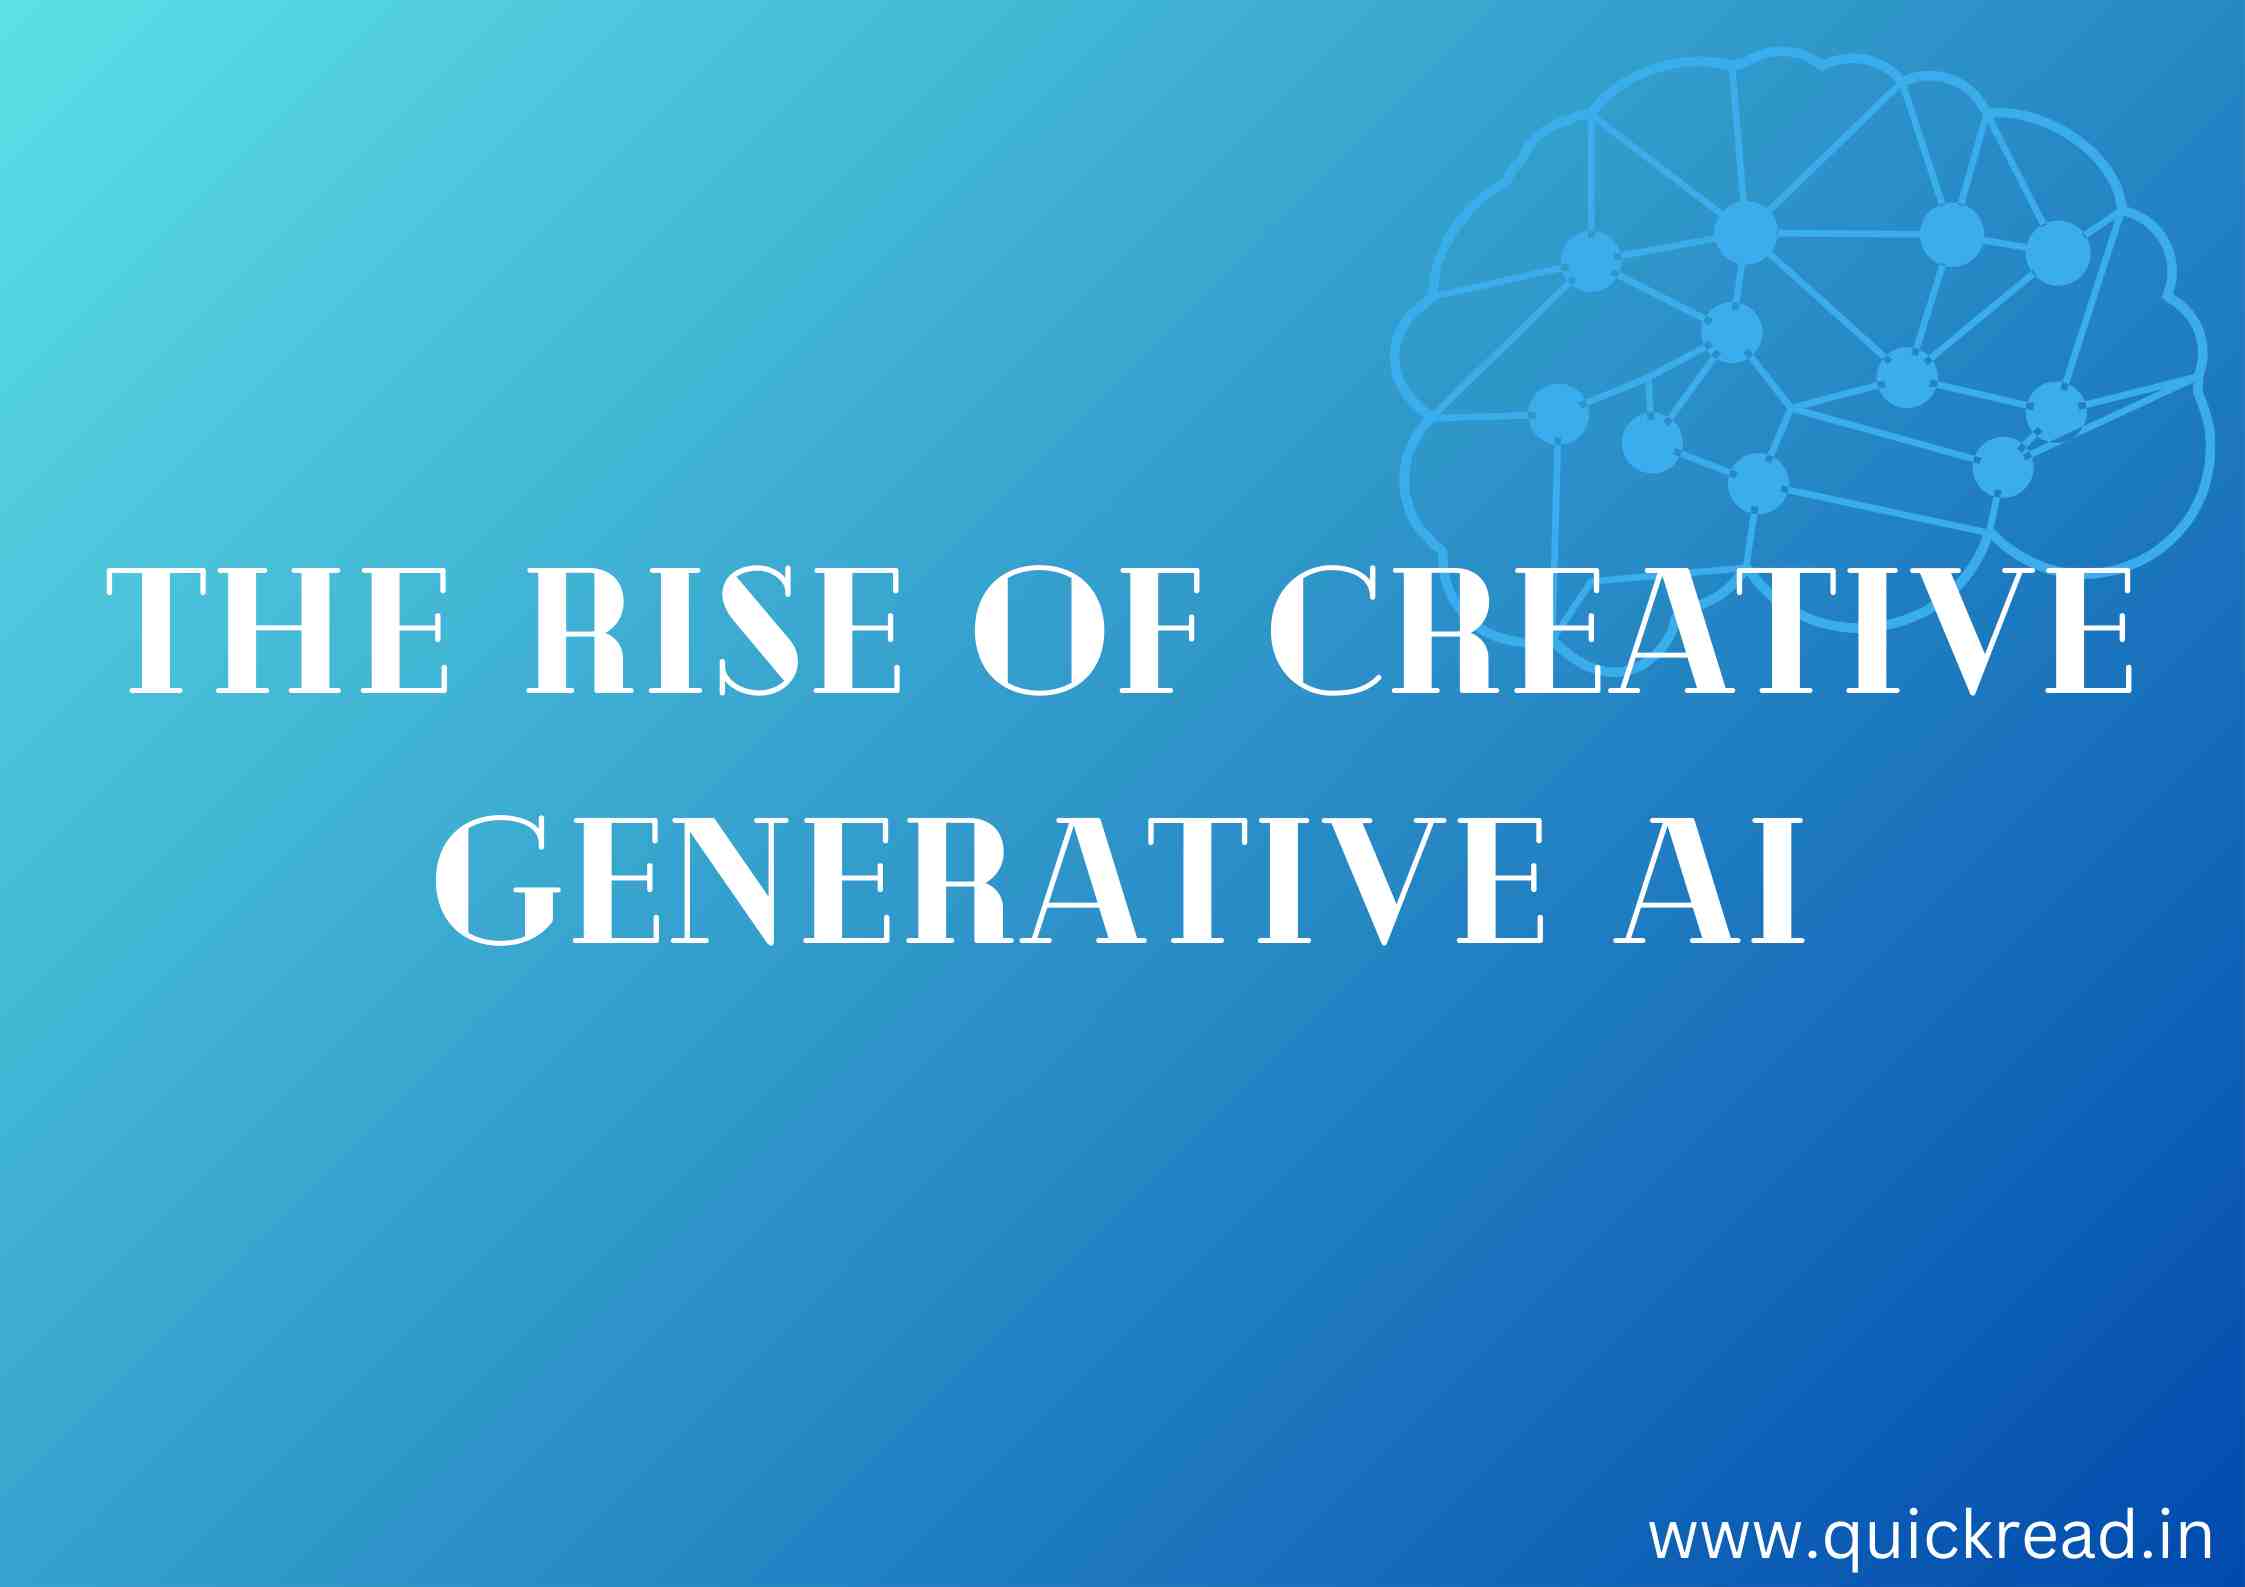 The Rise of Creative Generative AI